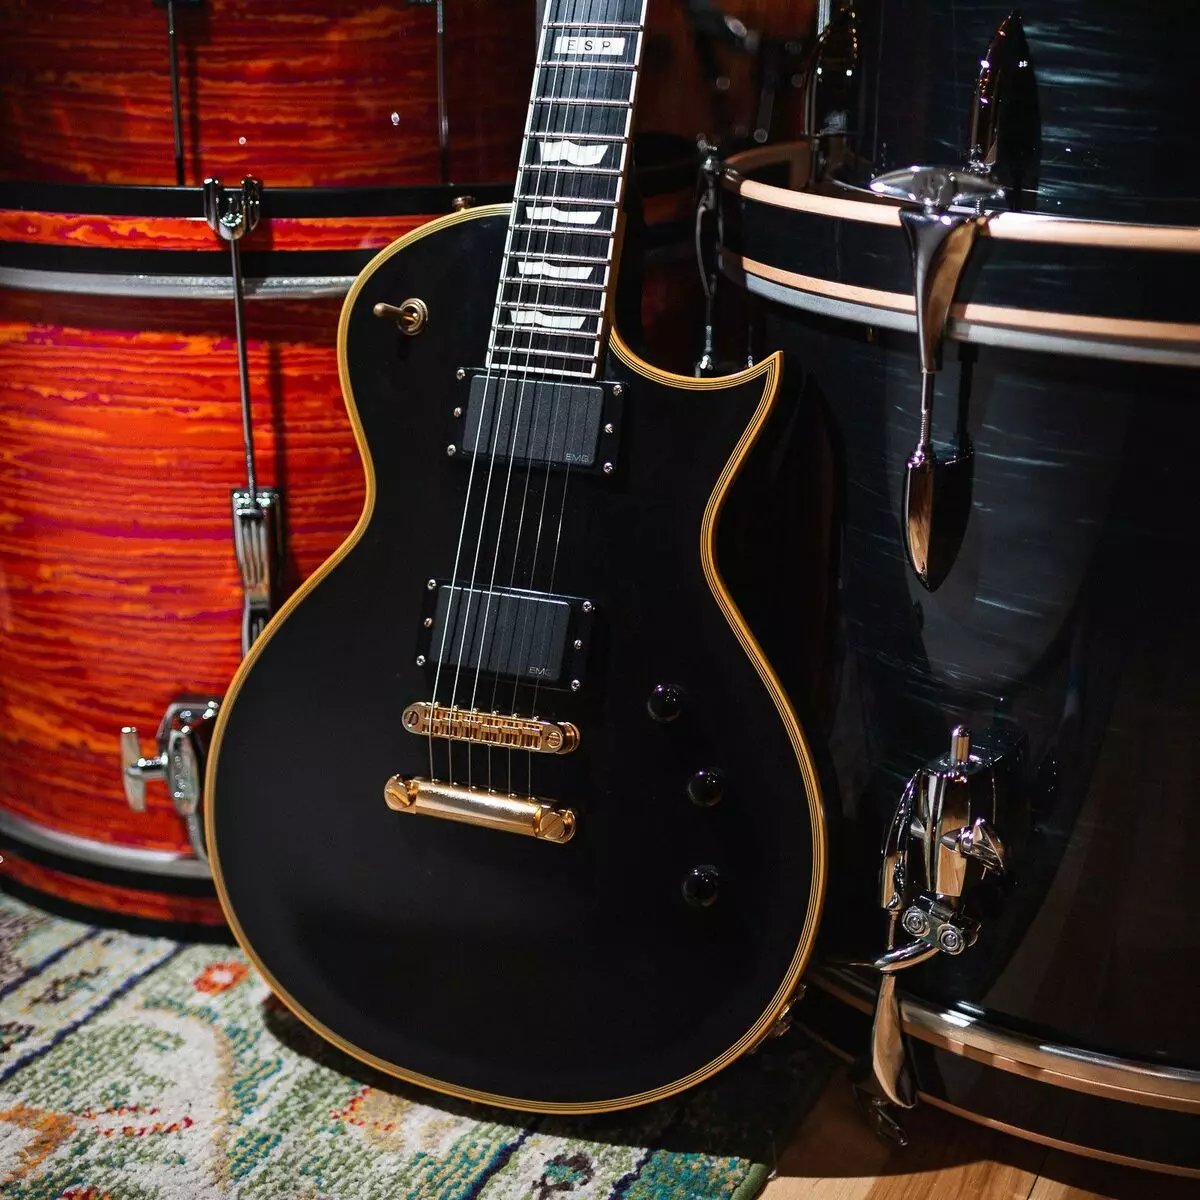 ESPギター：LTD電気ギターとベースギター、E-II Eclipseおよびその他のモデル、選択の特徴 27147_2